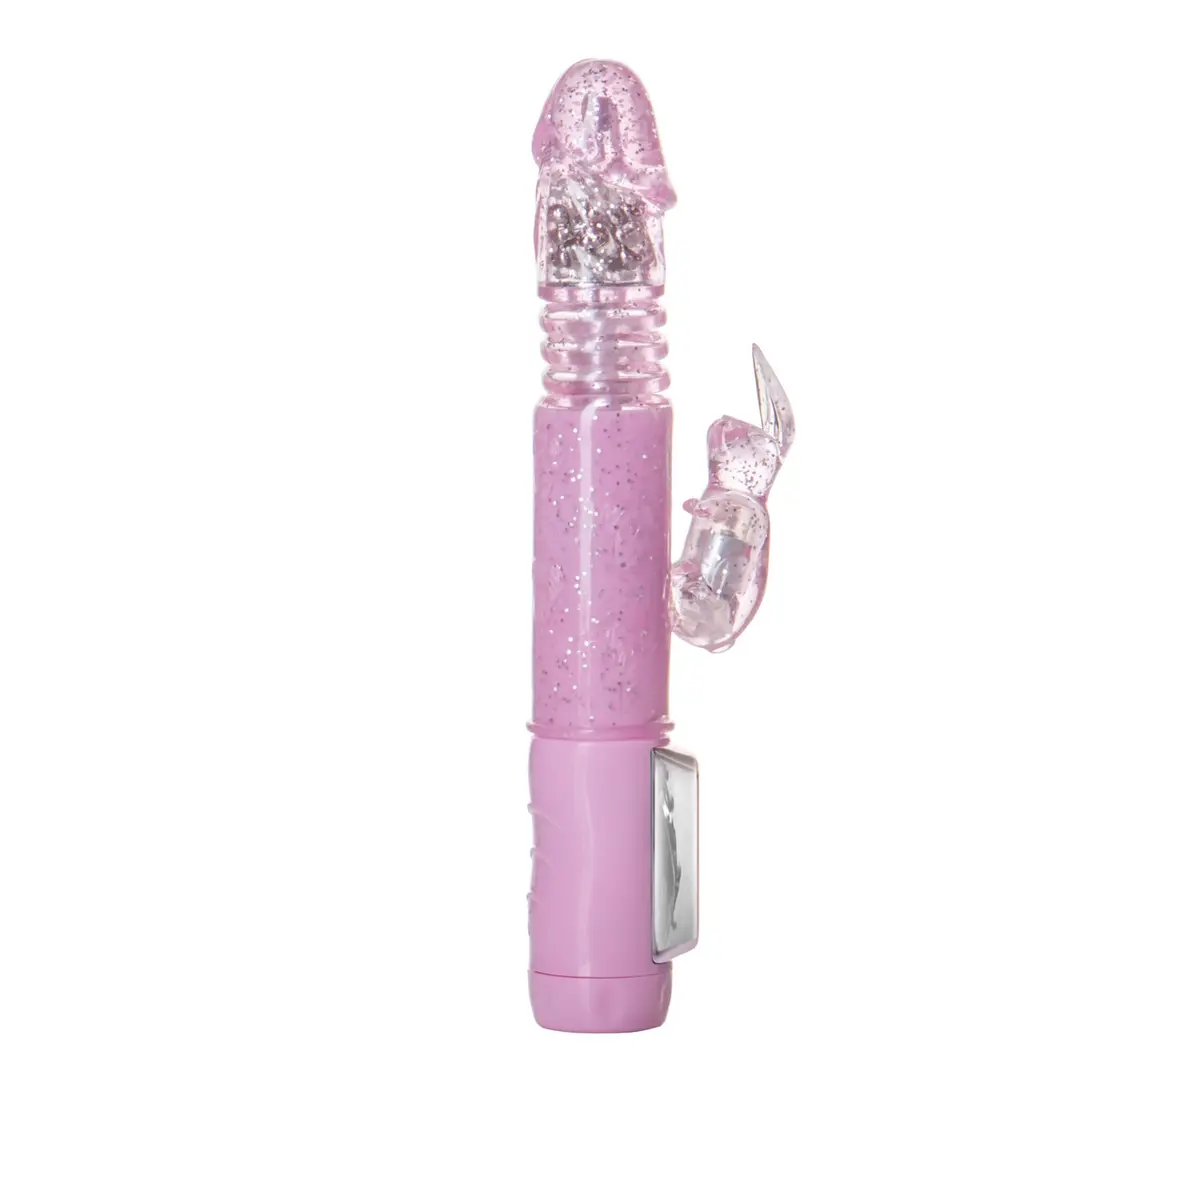 4. Calexotics - Petite Thrusting Jack Rabbit - Pink Vibrator